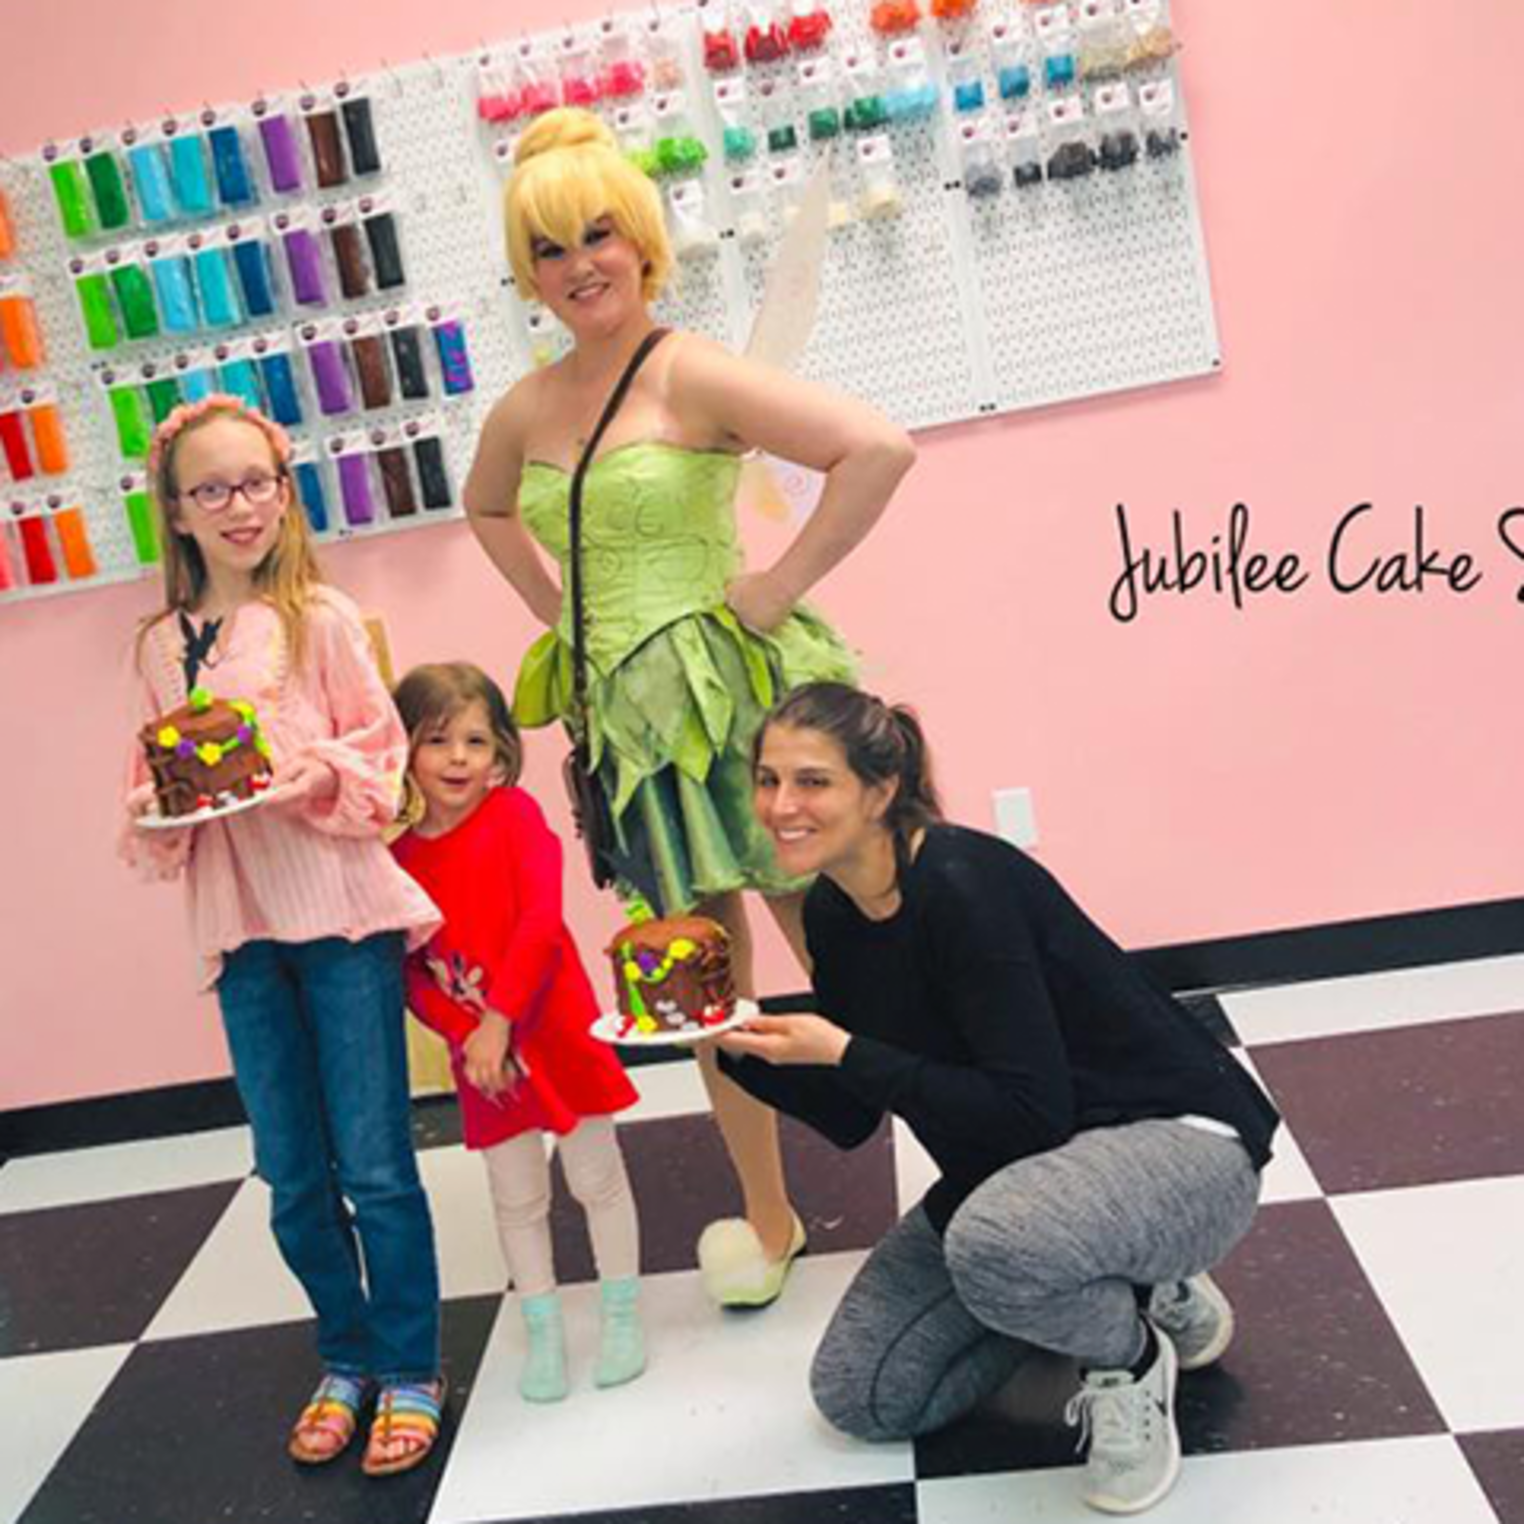 Jubilee Cake Studio